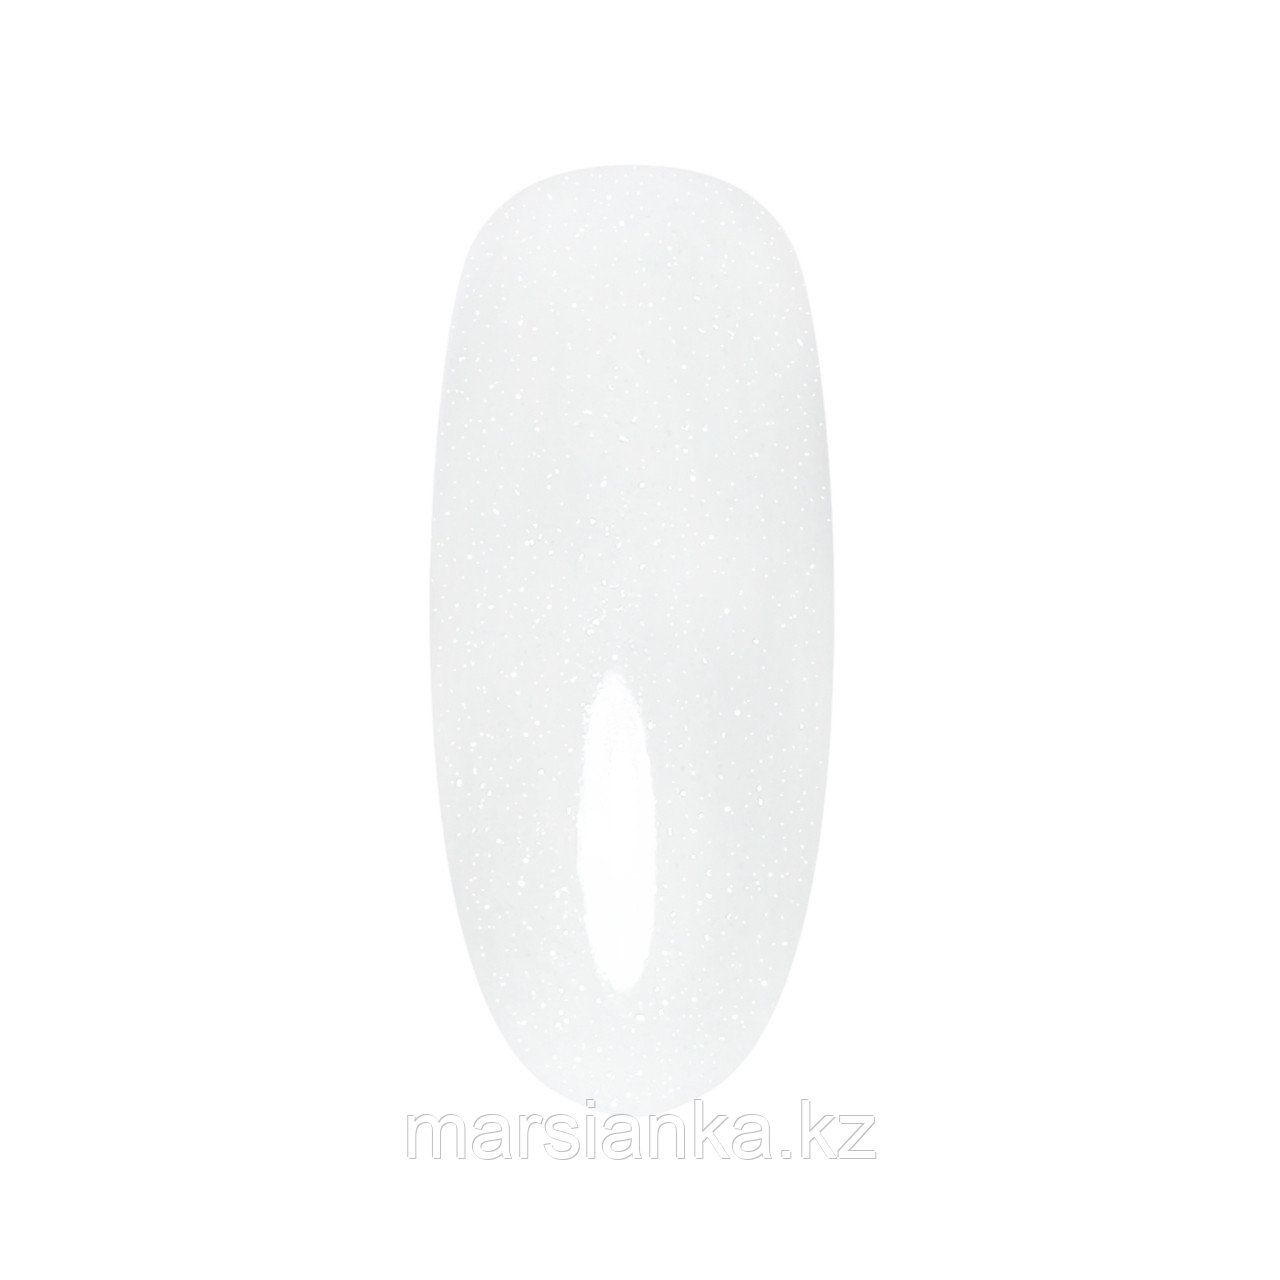 LUX Base Nail Best White Shine , 15мл (база белая с шиммером)